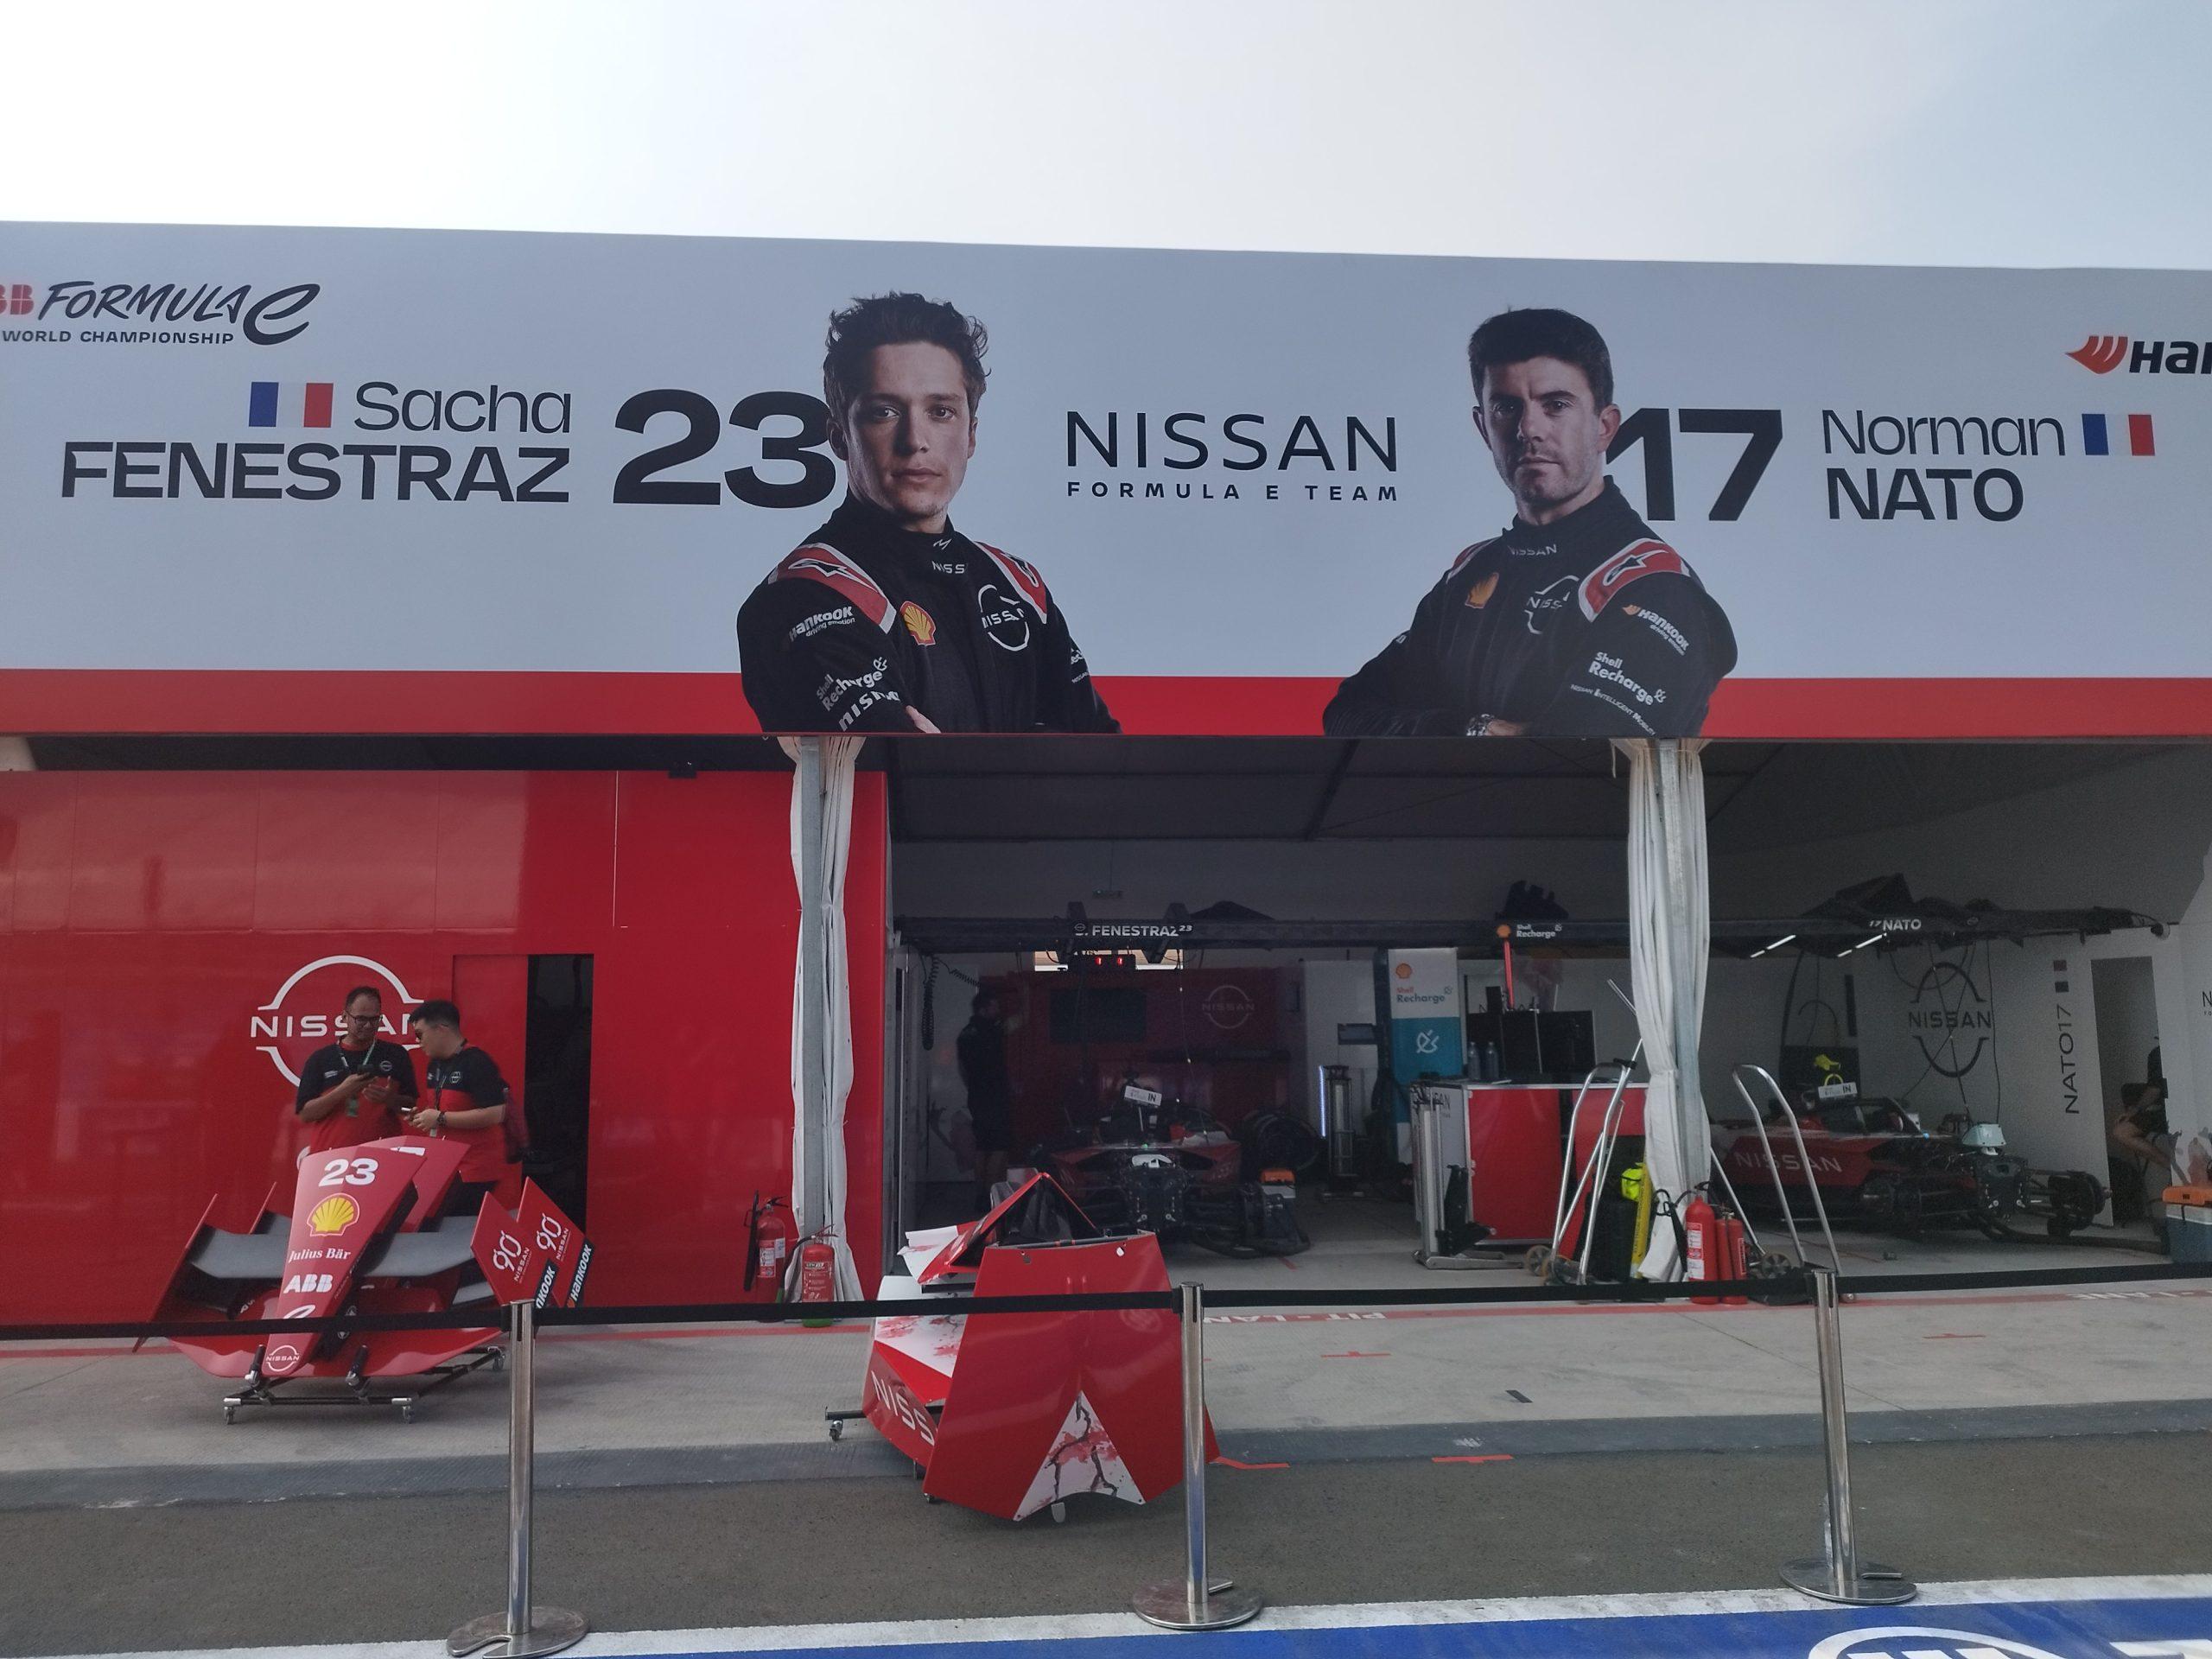 Tim Nissan Formula E